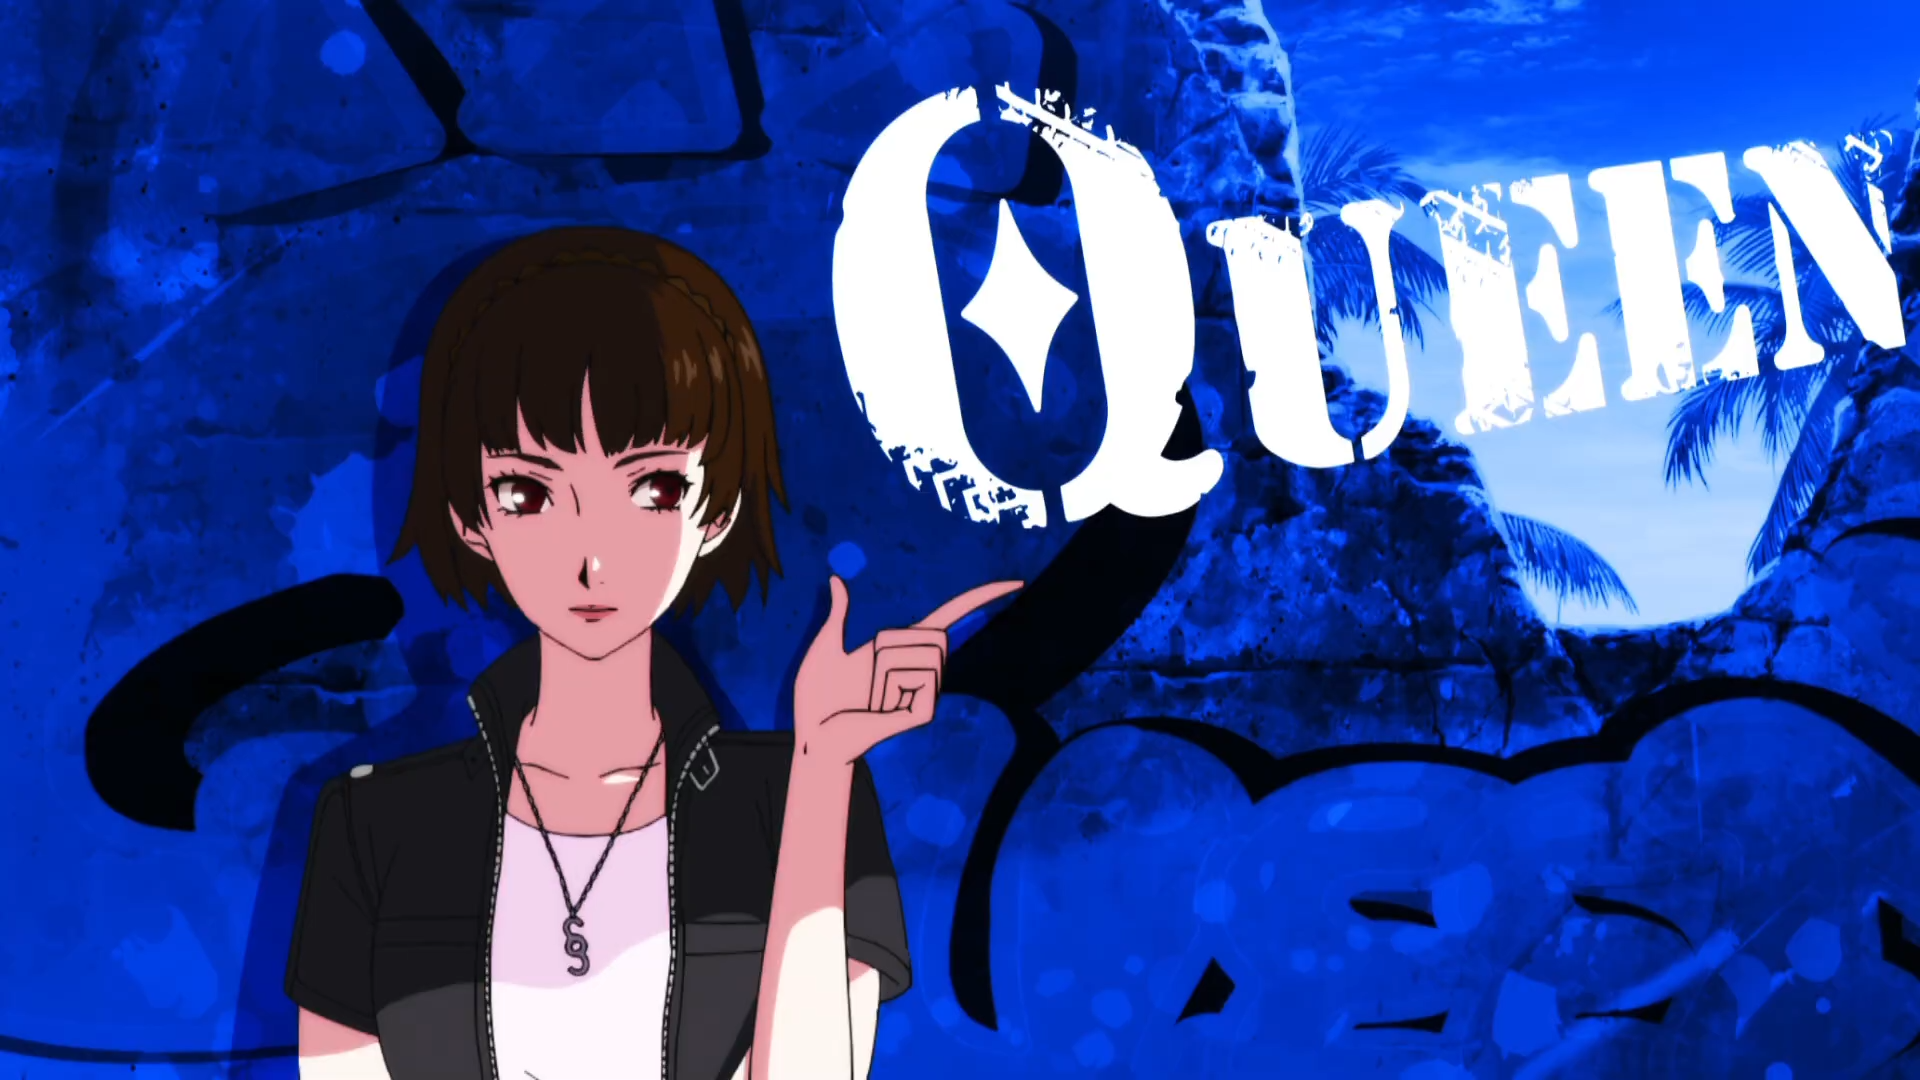 Queen Persona 5 Anime Girl 4K Wallpapers